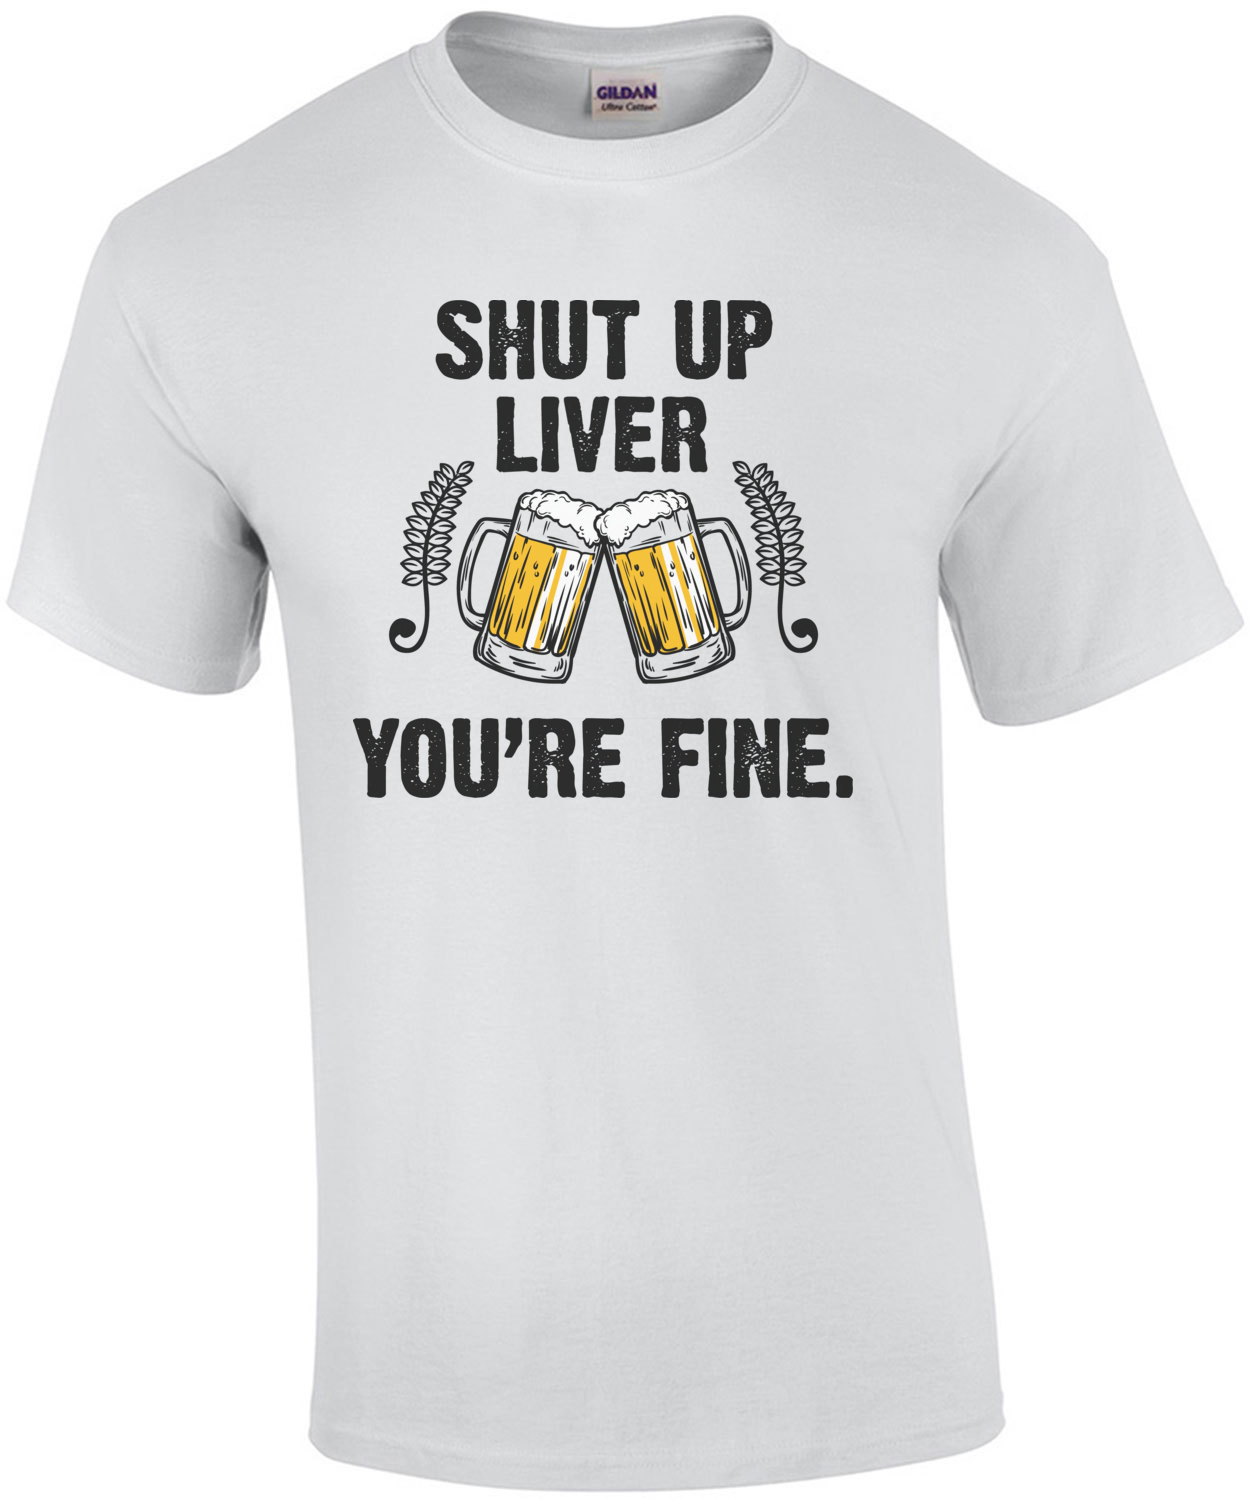 Shut up liver - you're fine - funny beer t-shirt